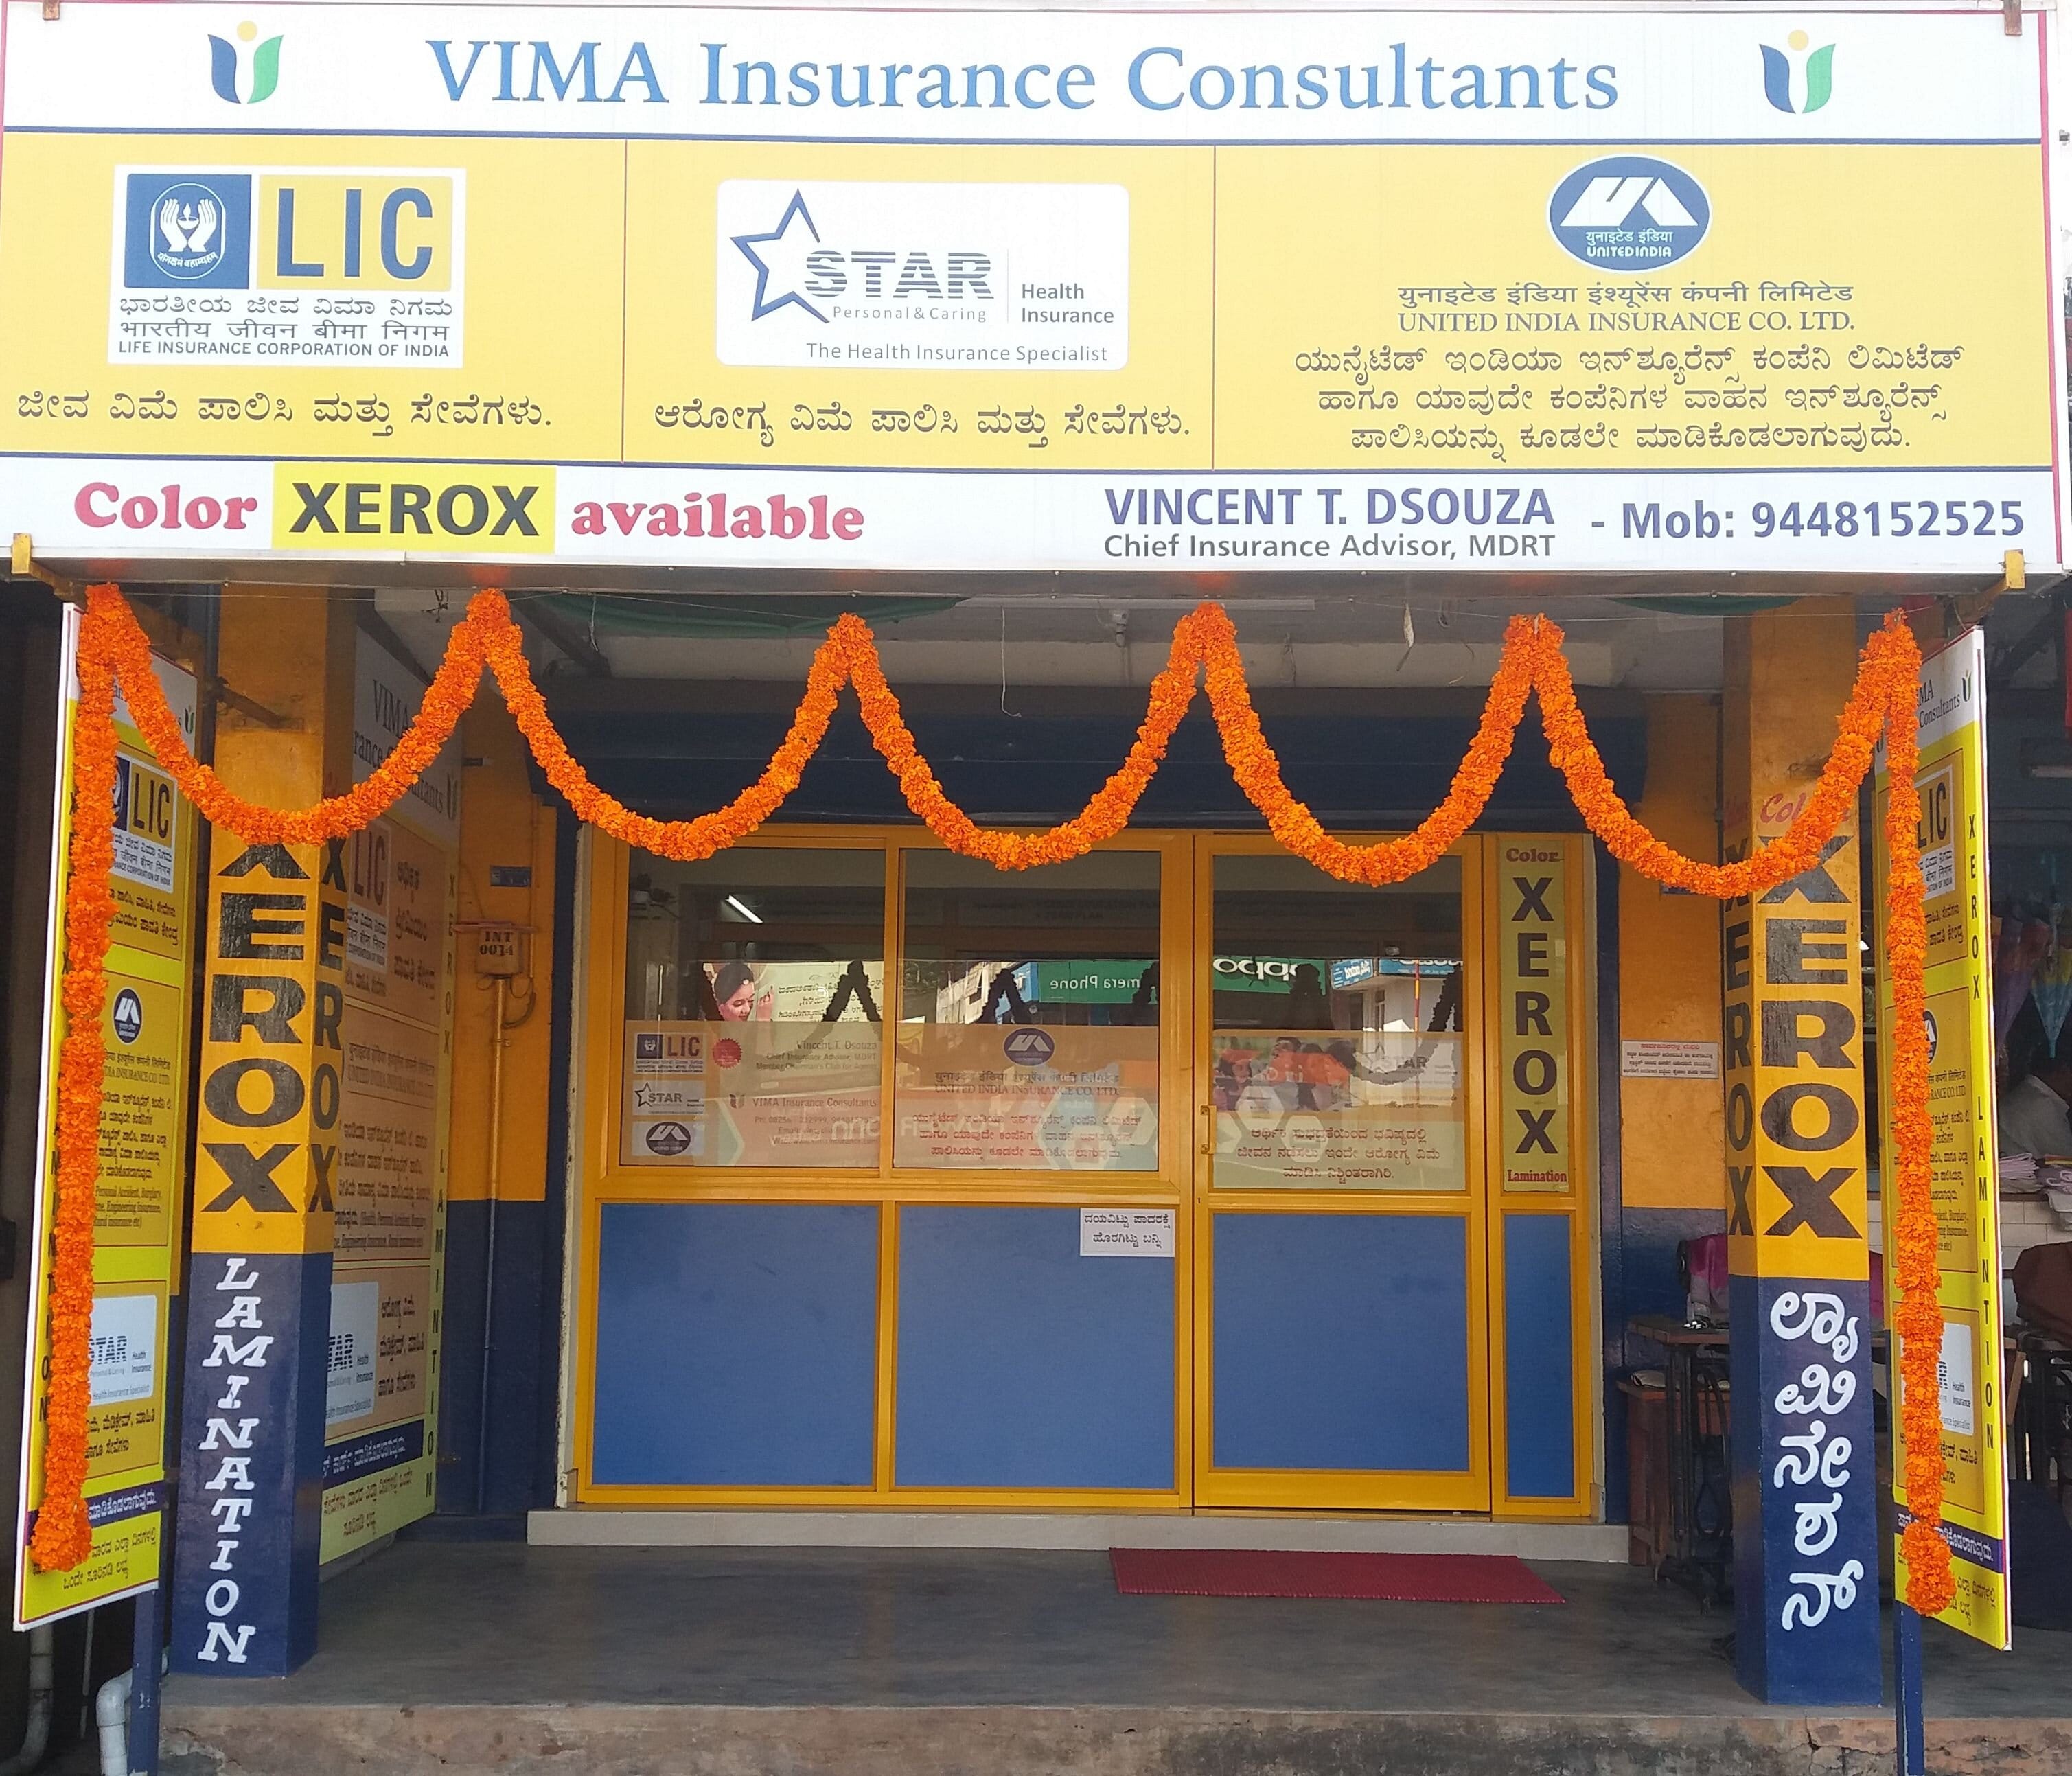 MY Office VIMA Insurance Consultants